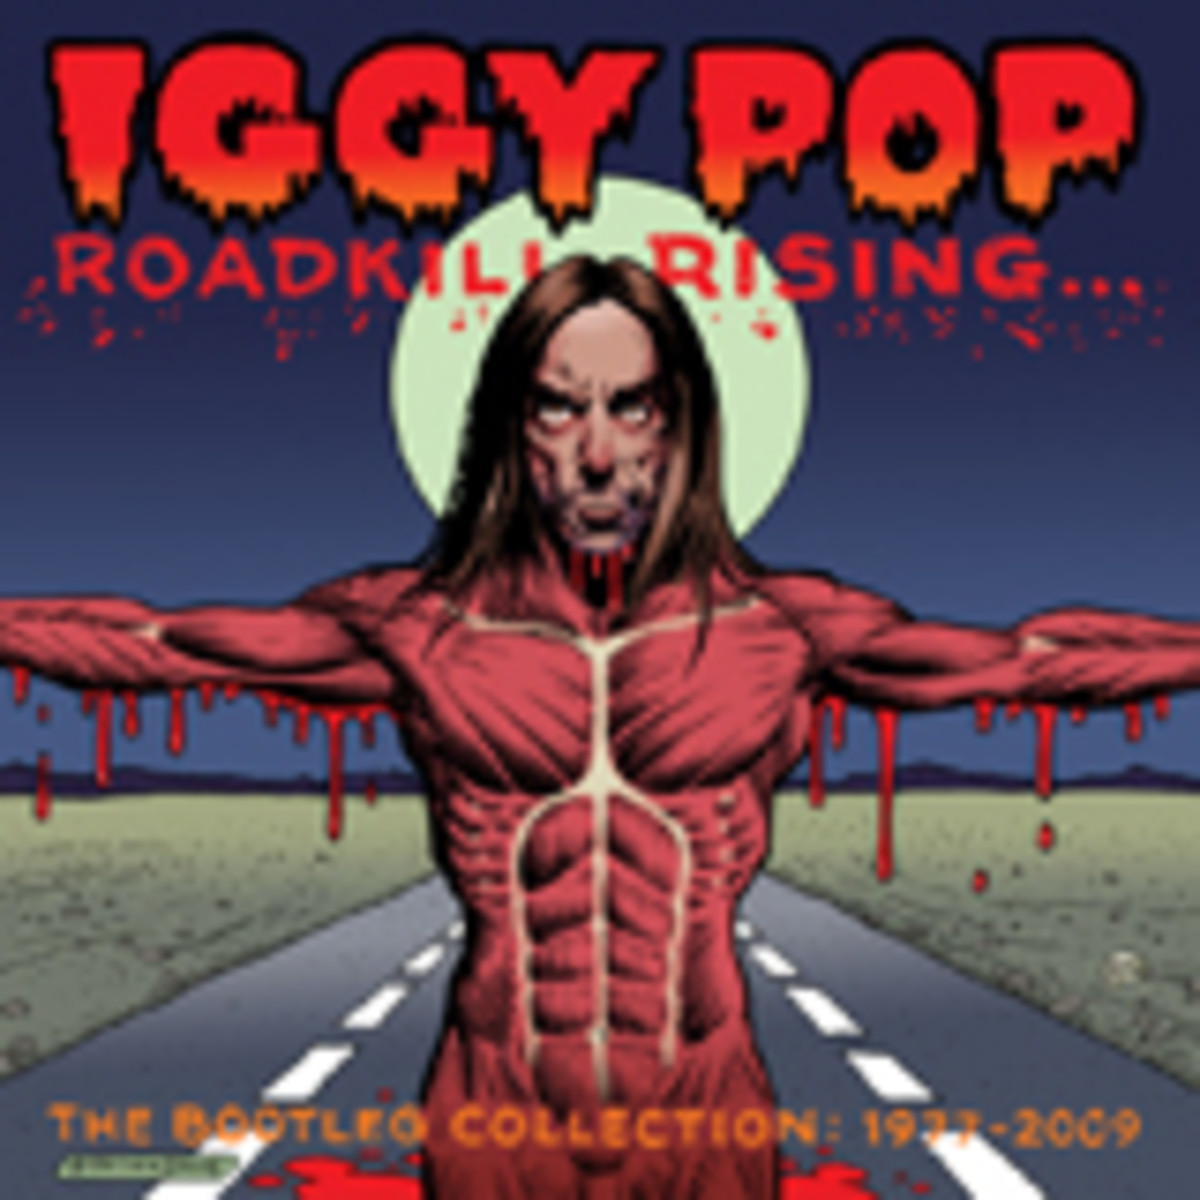 Iggy Pop Roadkill Rising Box Set